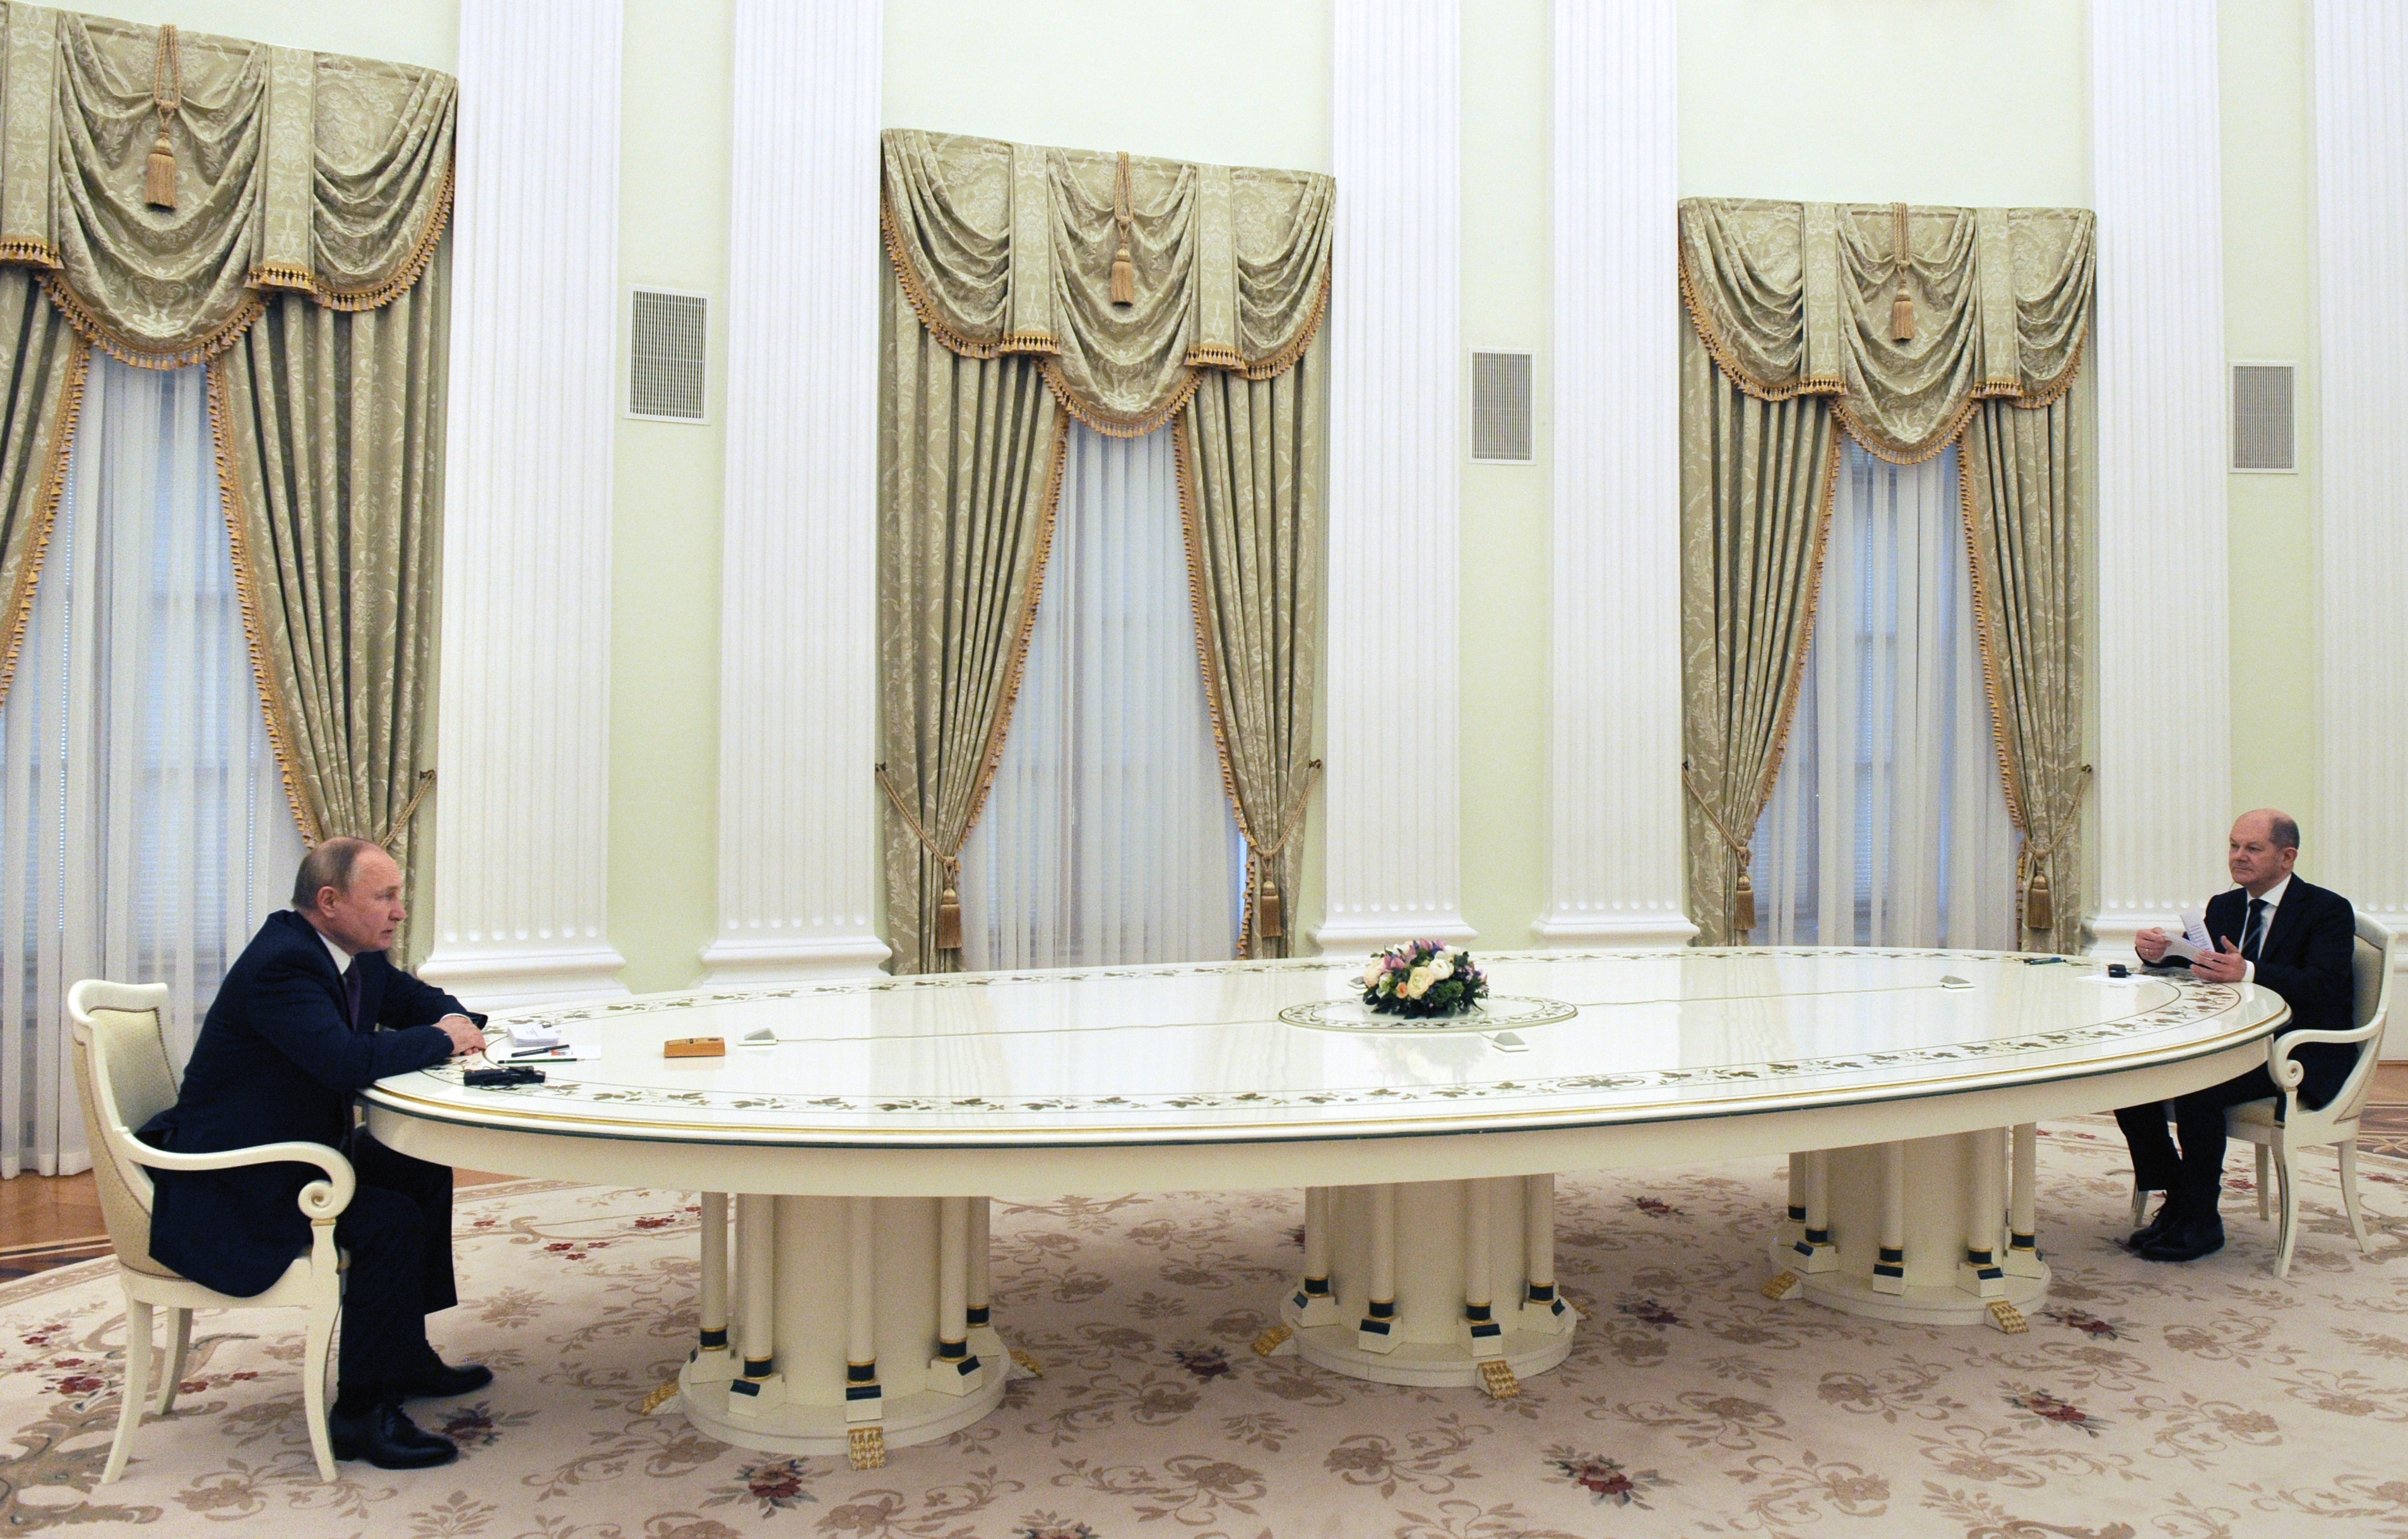 Vladimir Putin and Olaf Scholz during talks in the Kremlin